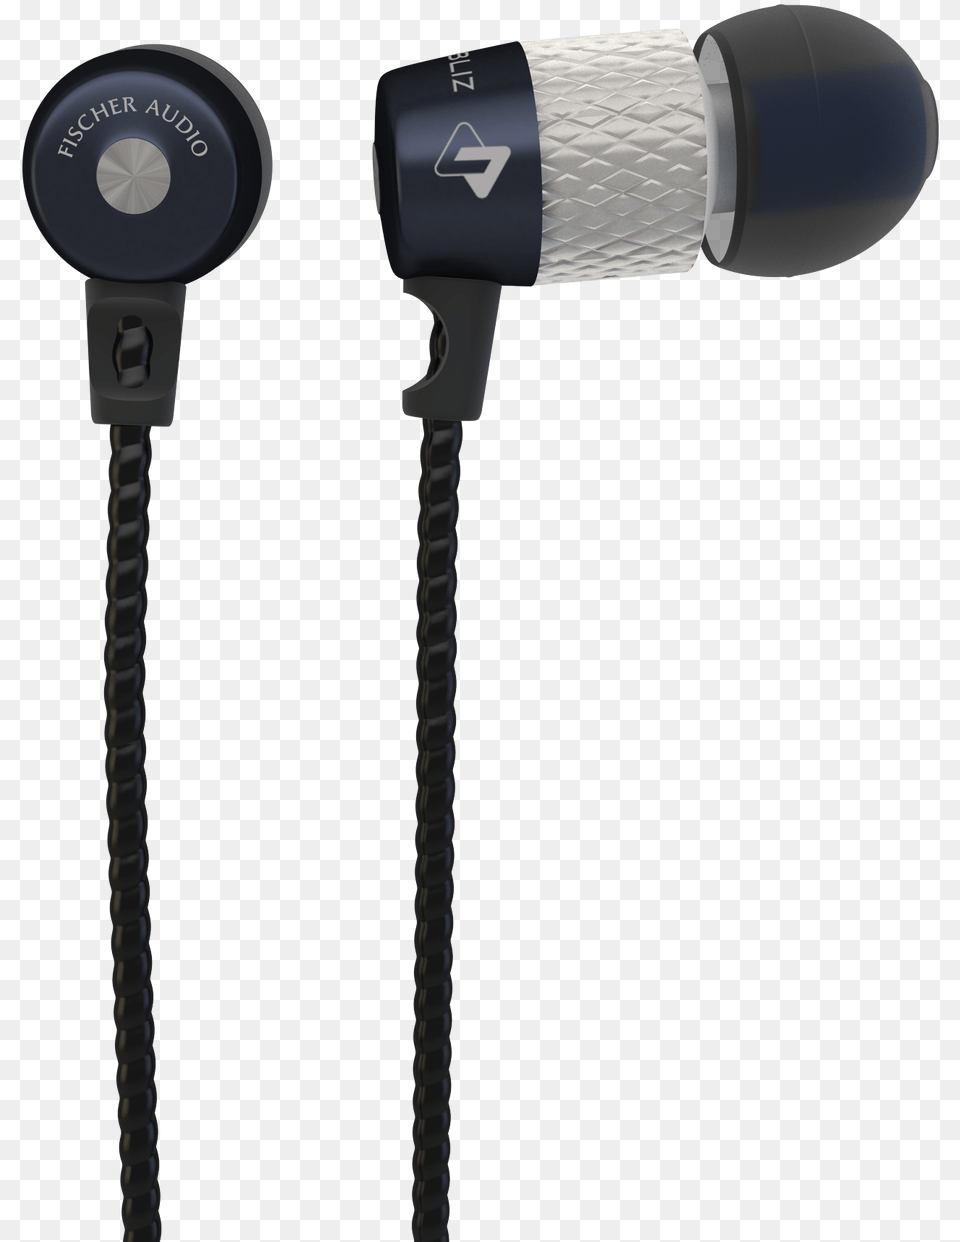 Fischer Audio Dubliz Gunmetal Blue In Ear Earphone Fischer Audio Dubliz Enhanced, Electrical Device, Microphone, Electronics Png